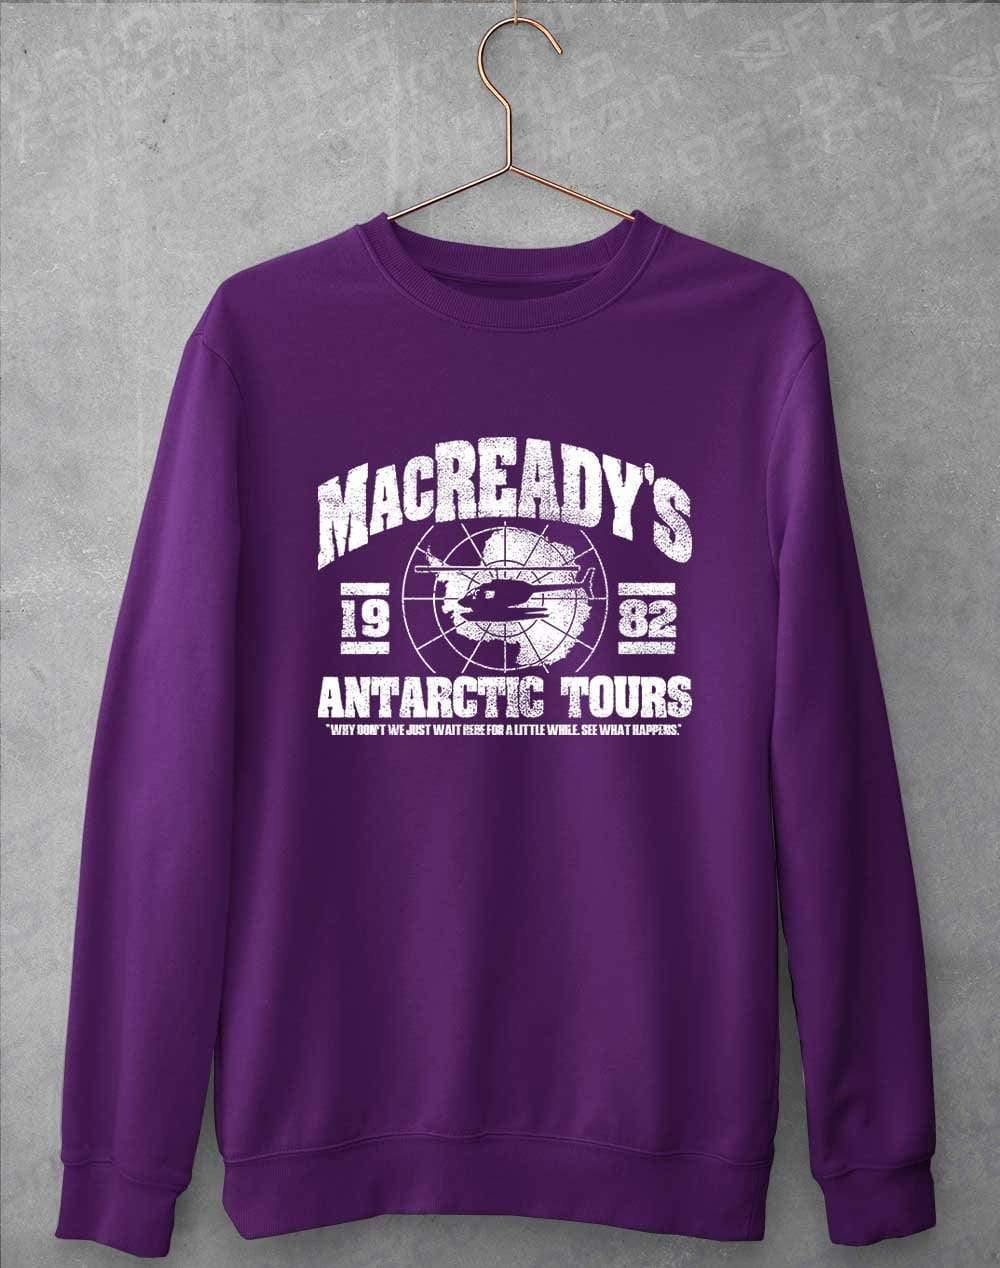 MacReady's Antarctic Tours 1982 Sweatshirt S / Purple  - Off World Tees